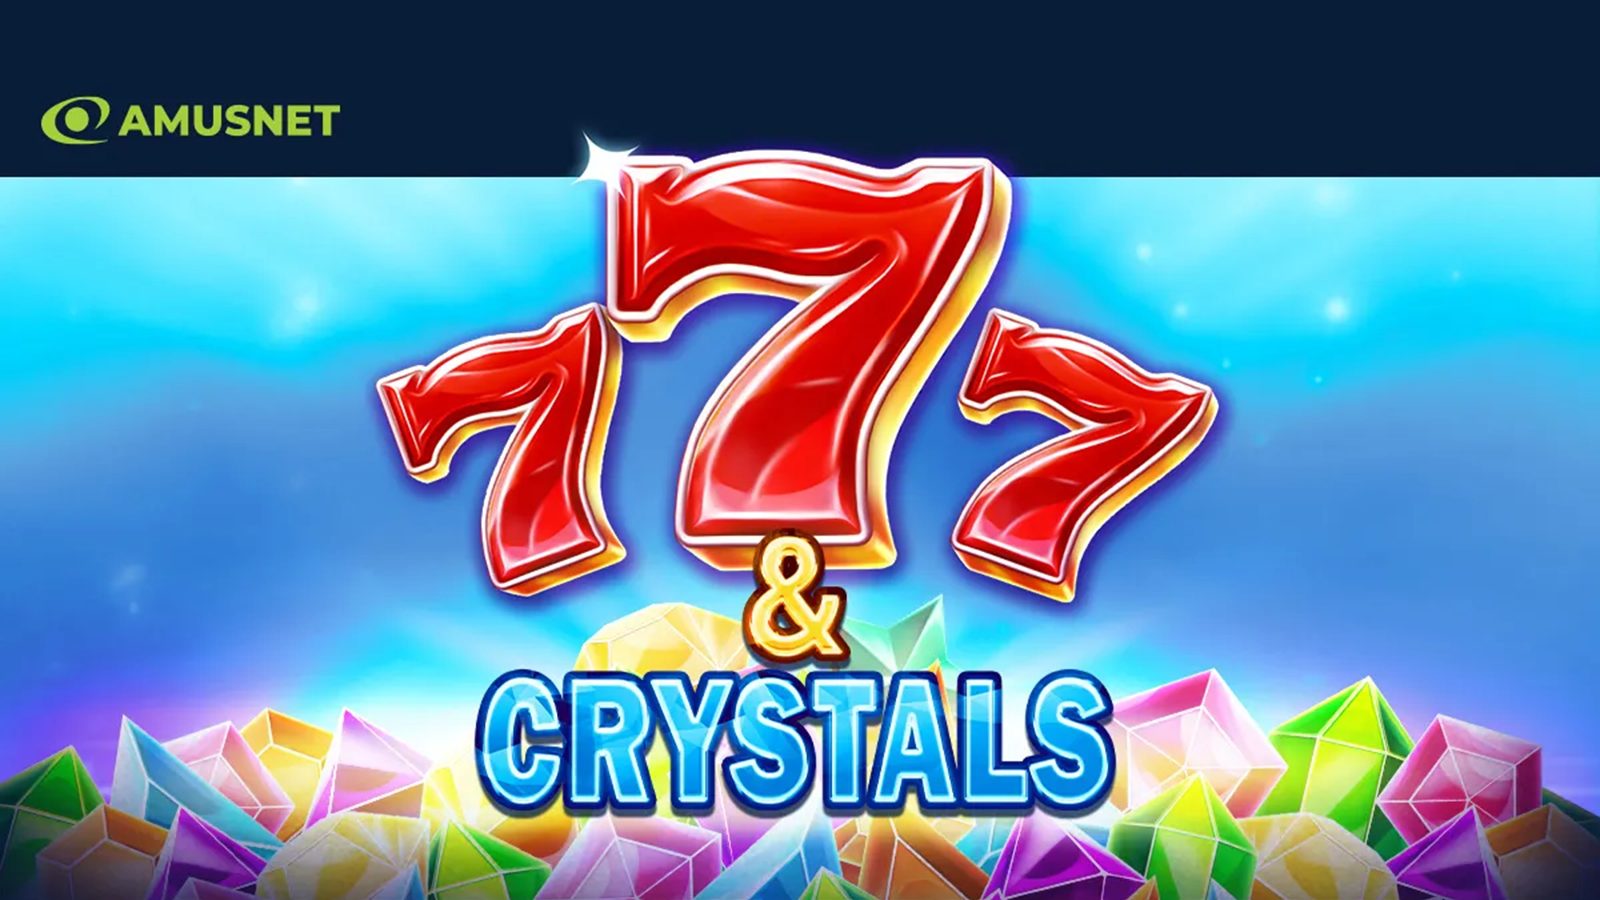 Amusnet - The 7&Crystals Video Slot